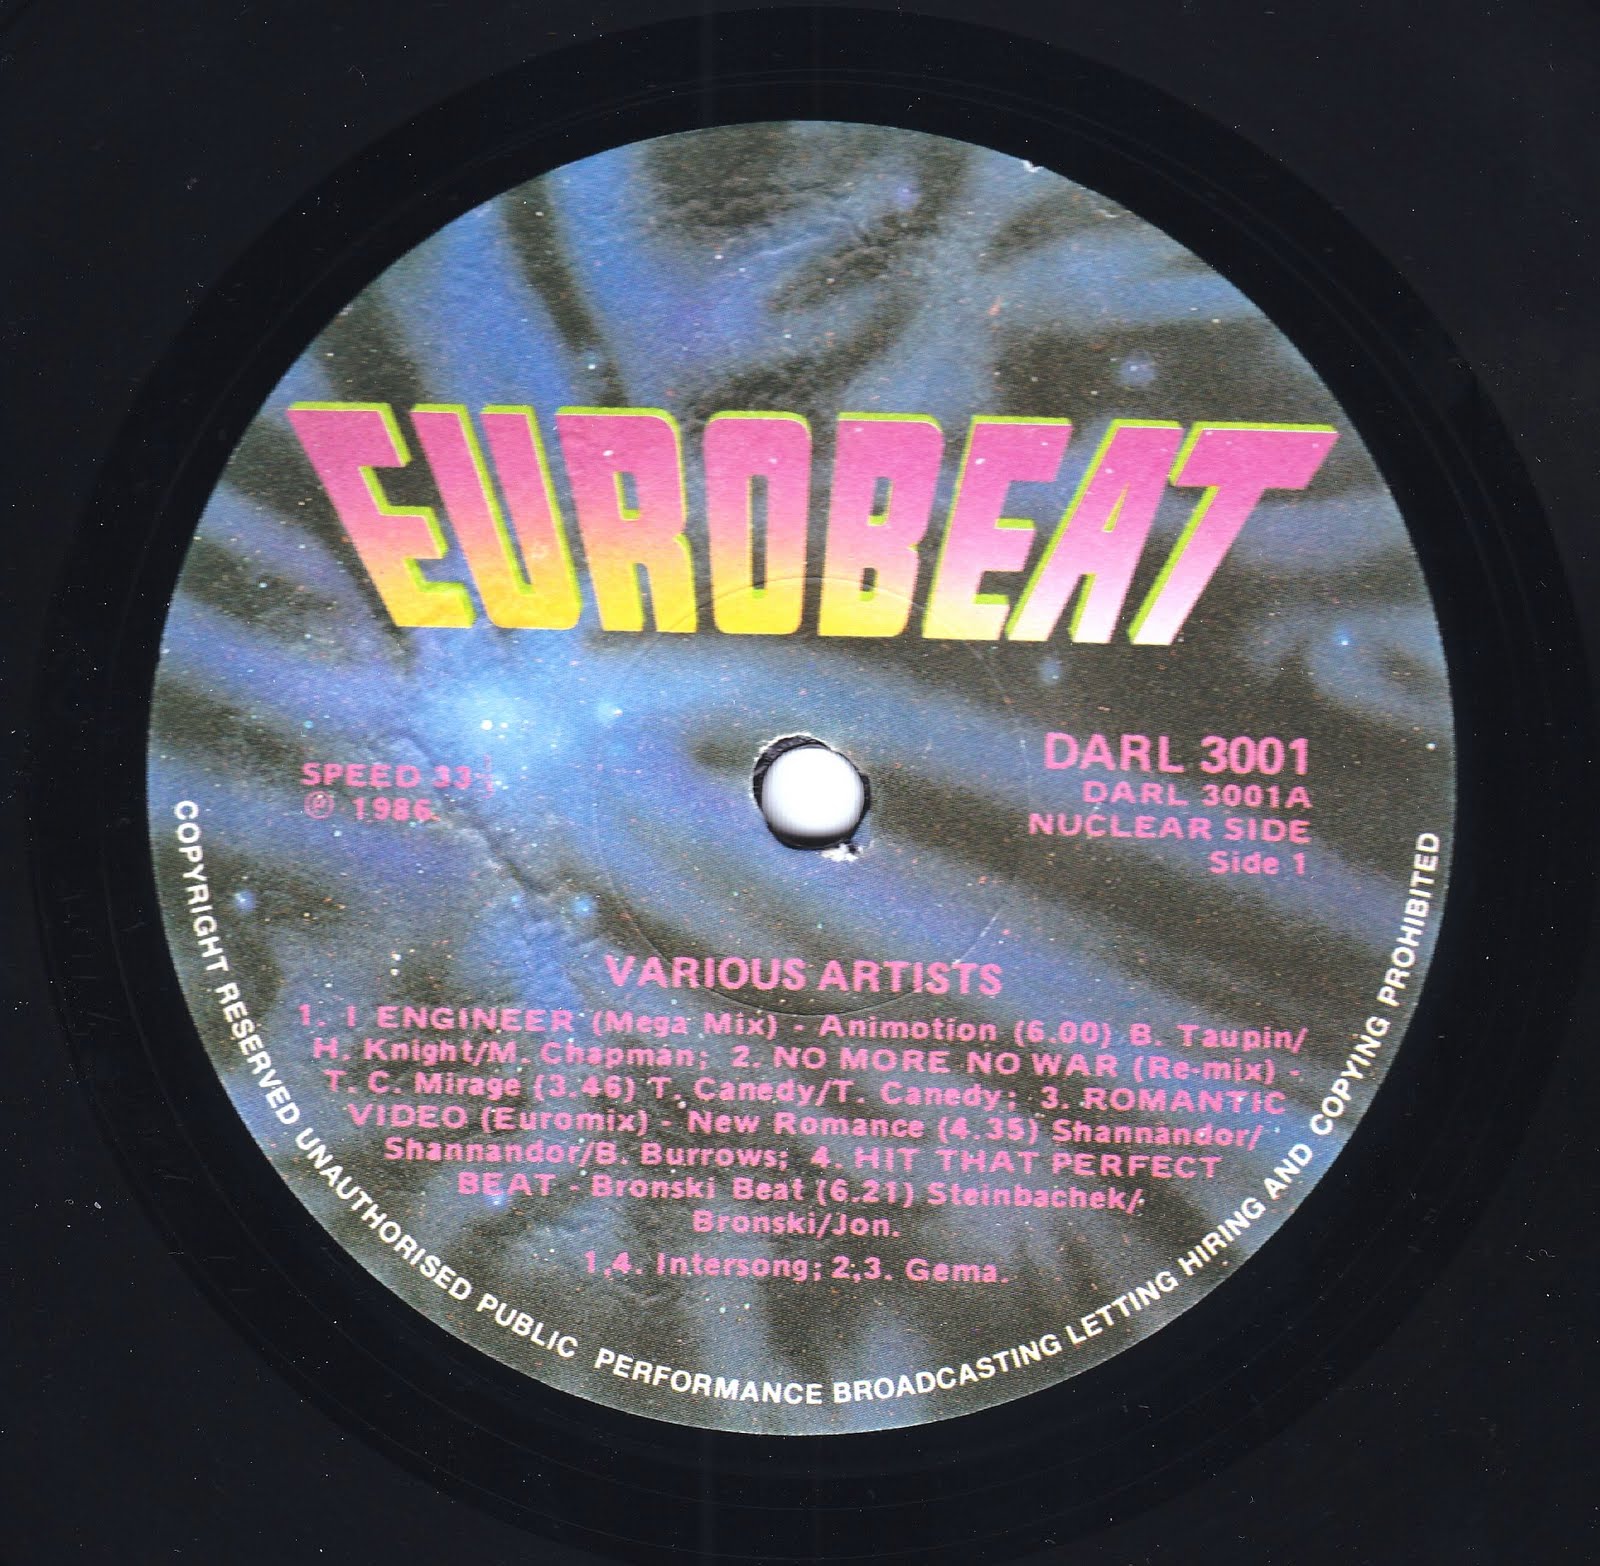 Retro Disco Hi Nrg Eurobeat Volume 1 90 Minute Non Stop Dance Remix 2lp Set 1986 Various